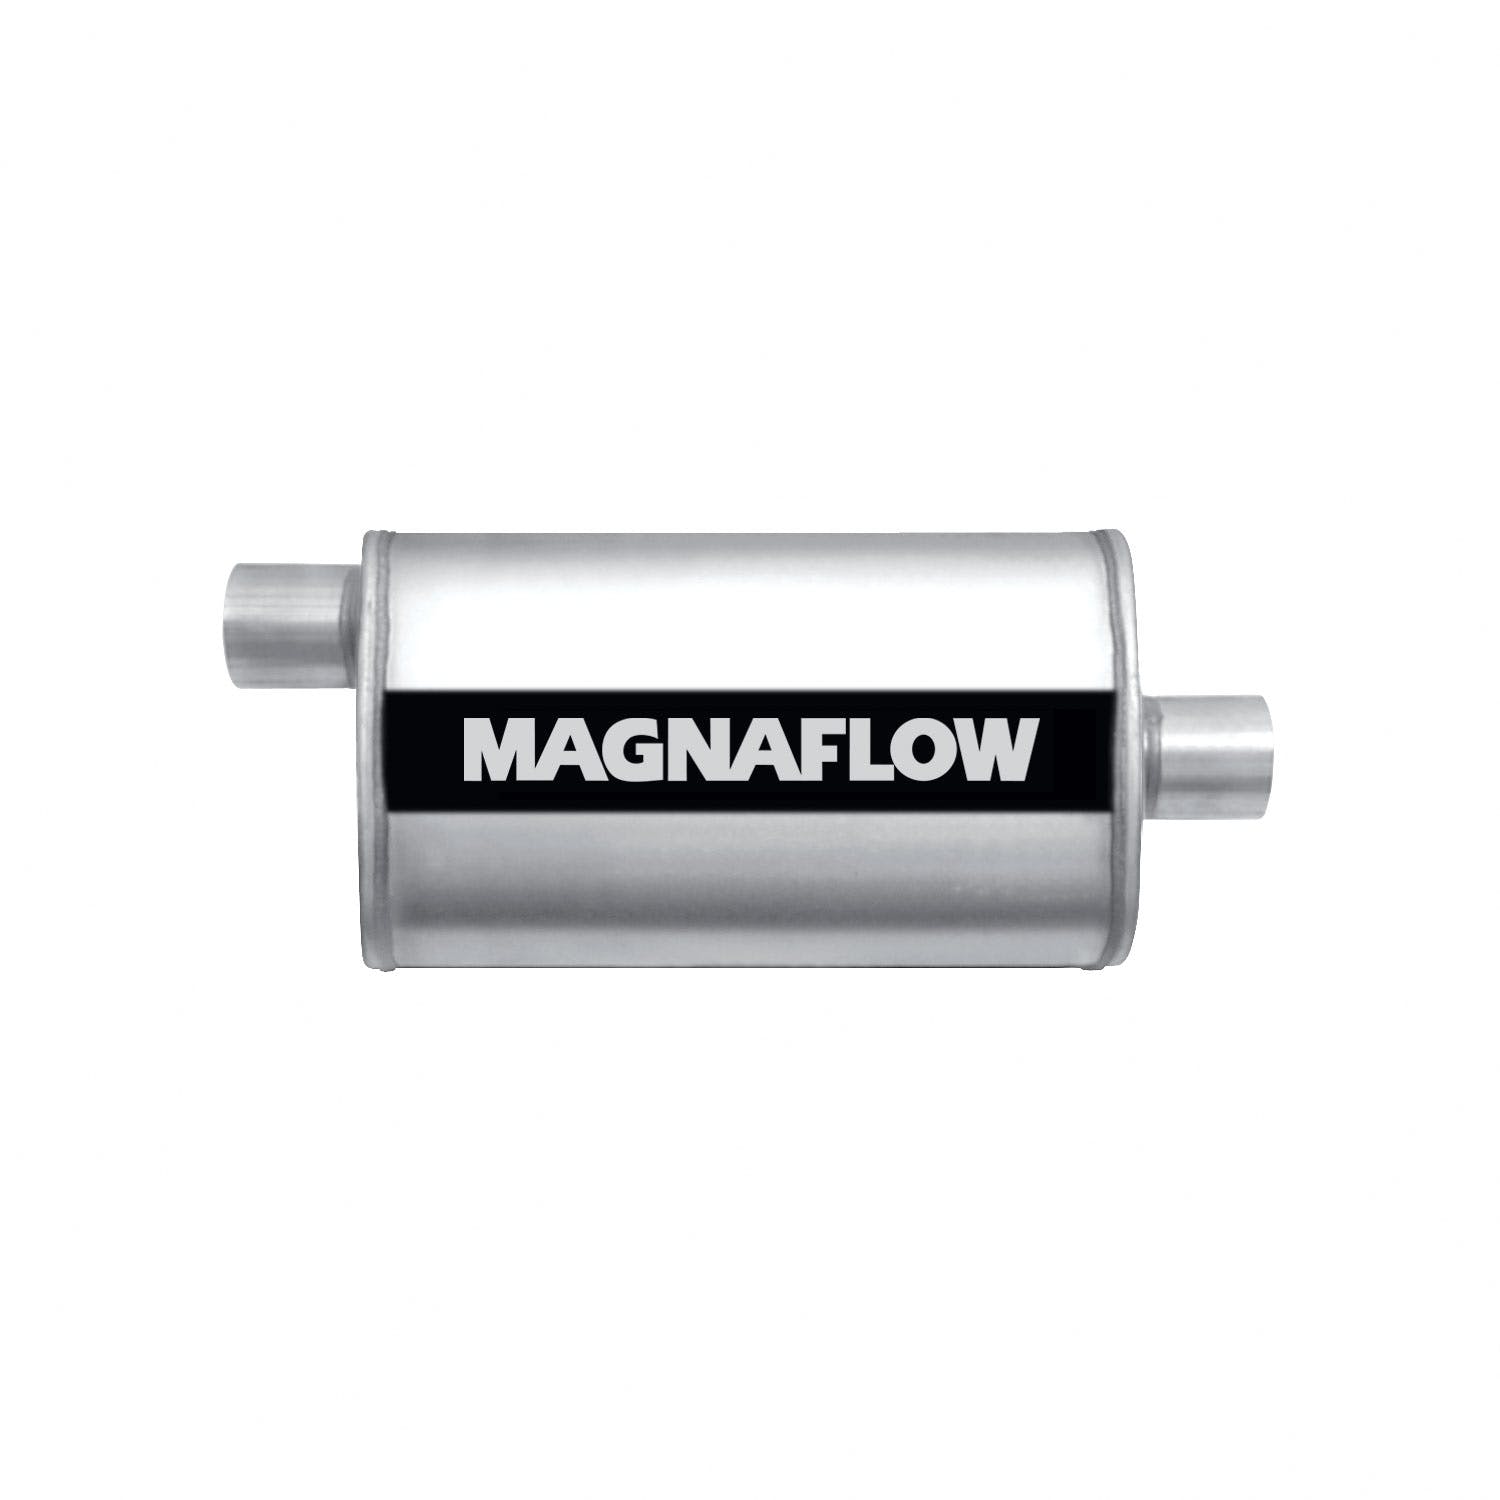 MagnaFlow Exhaust Products 11224 Universal Muffler